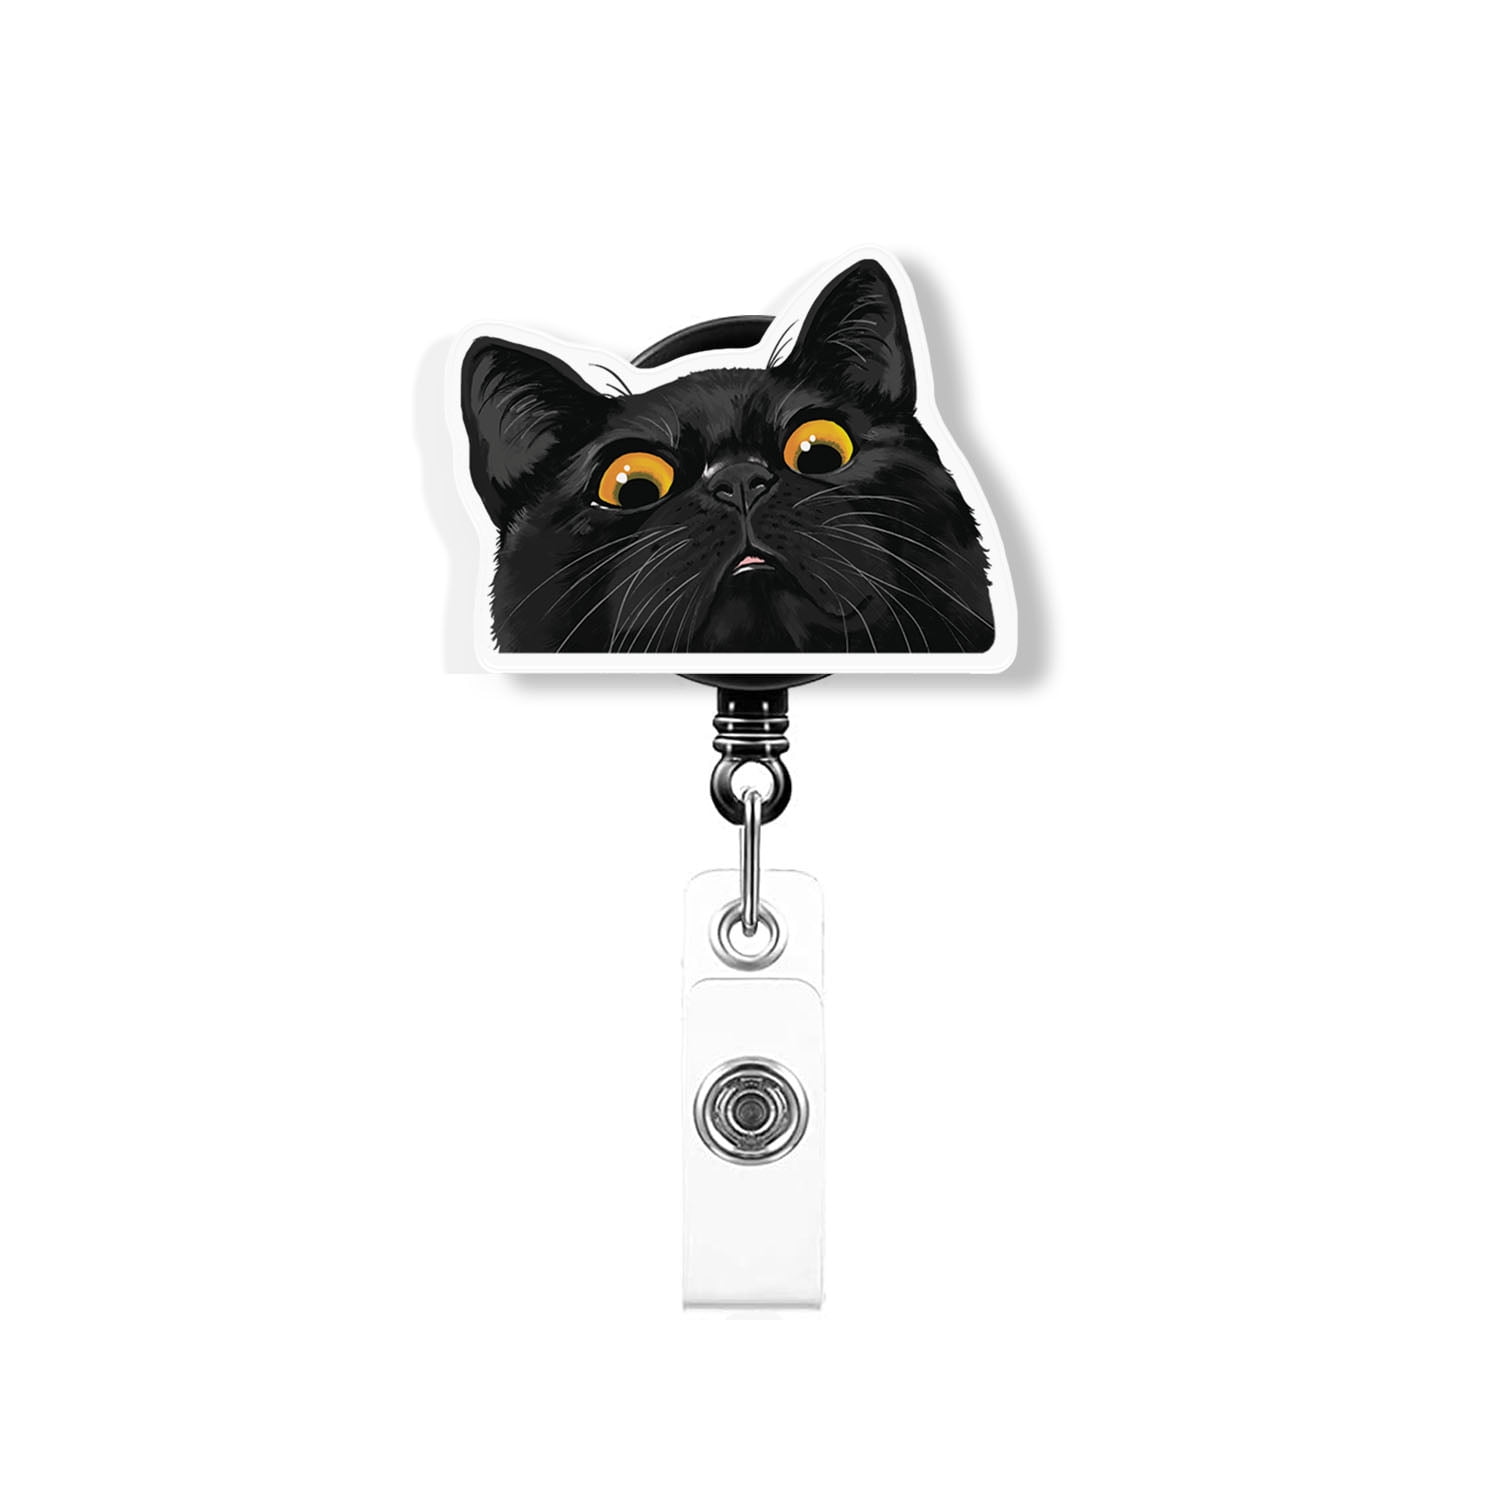 WIRESTER Acrylic Reel ID Holder Belt Clip Badge Retractable with Alligator  Clip for Office Worker, Medical Staffs, Nurse, Doctor, Teacher, Student -  Animal Black Bombay Kitten Cat 